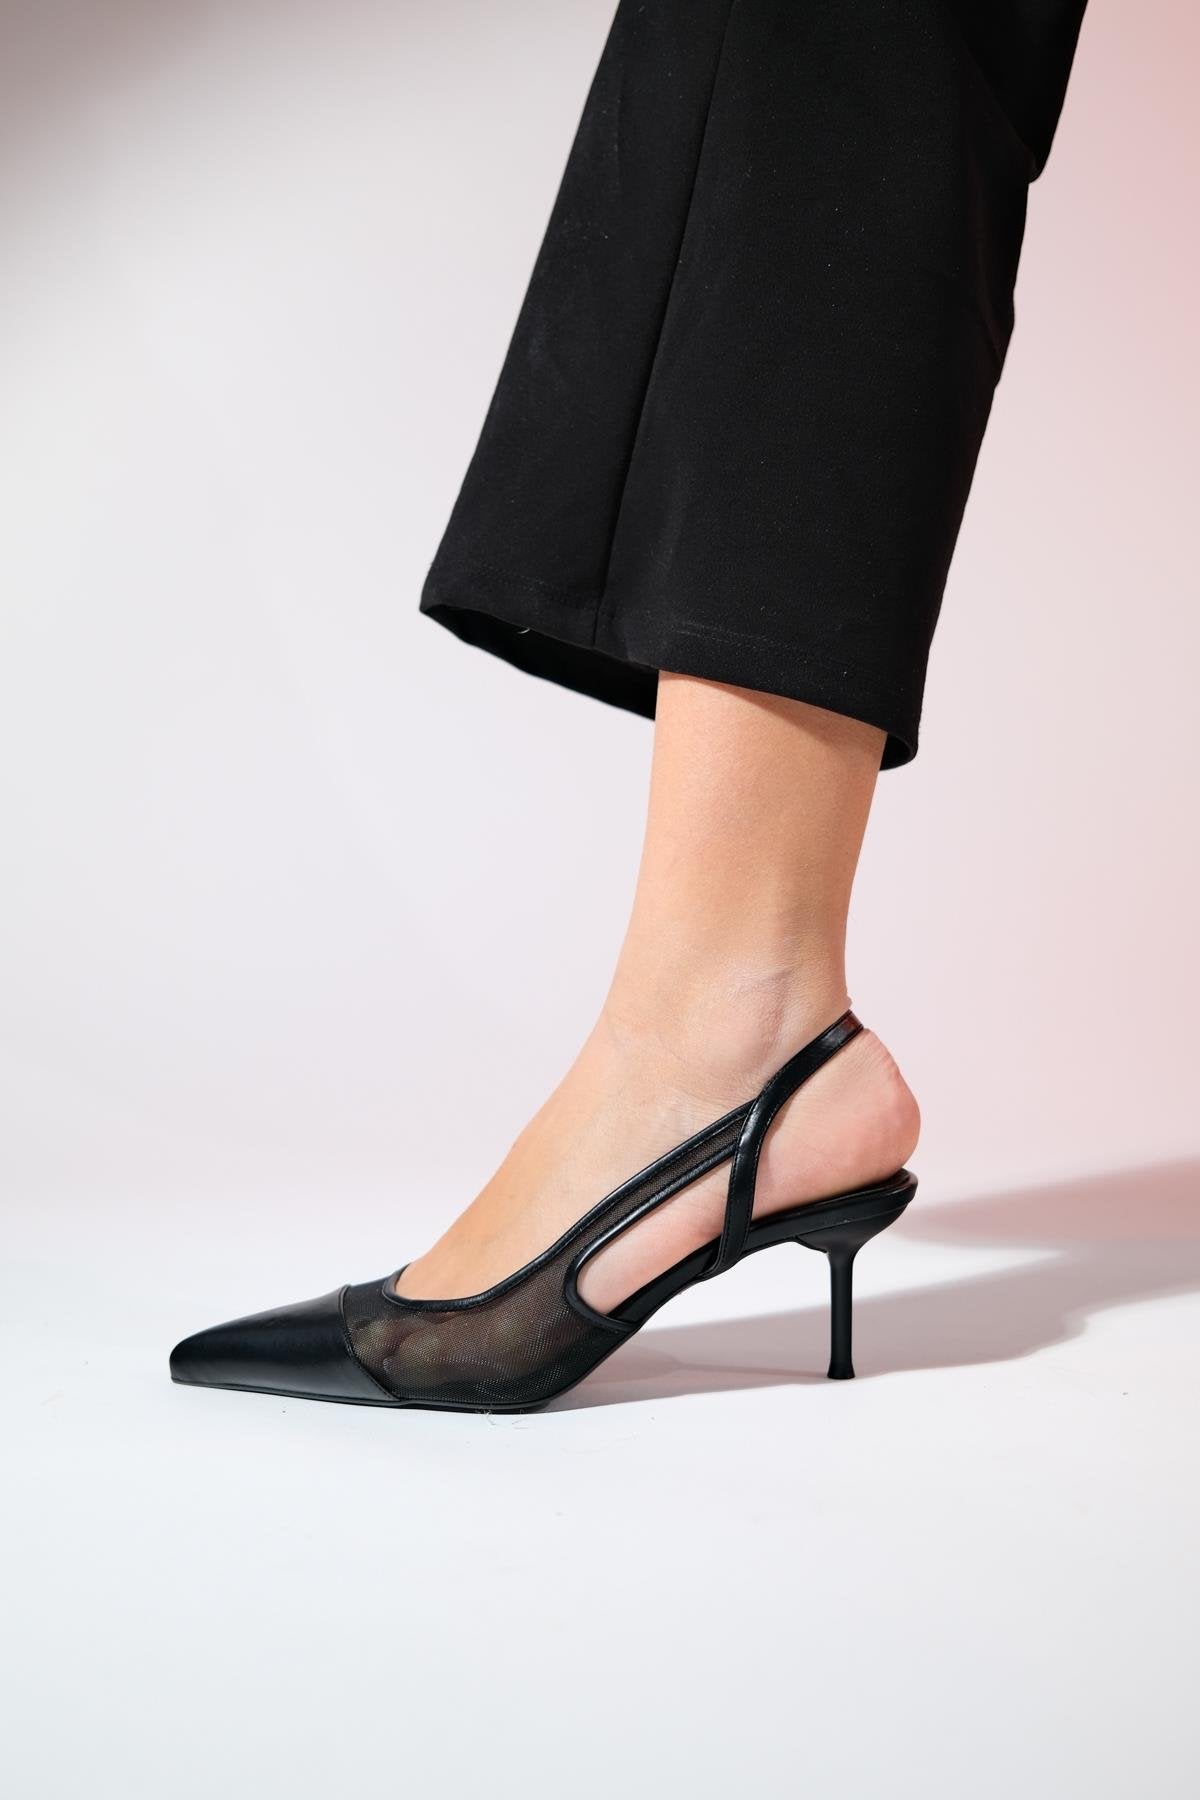 RAVENNA Black Women's Pointed Toe Open Back Thin Heeled Shoes - Lebbse